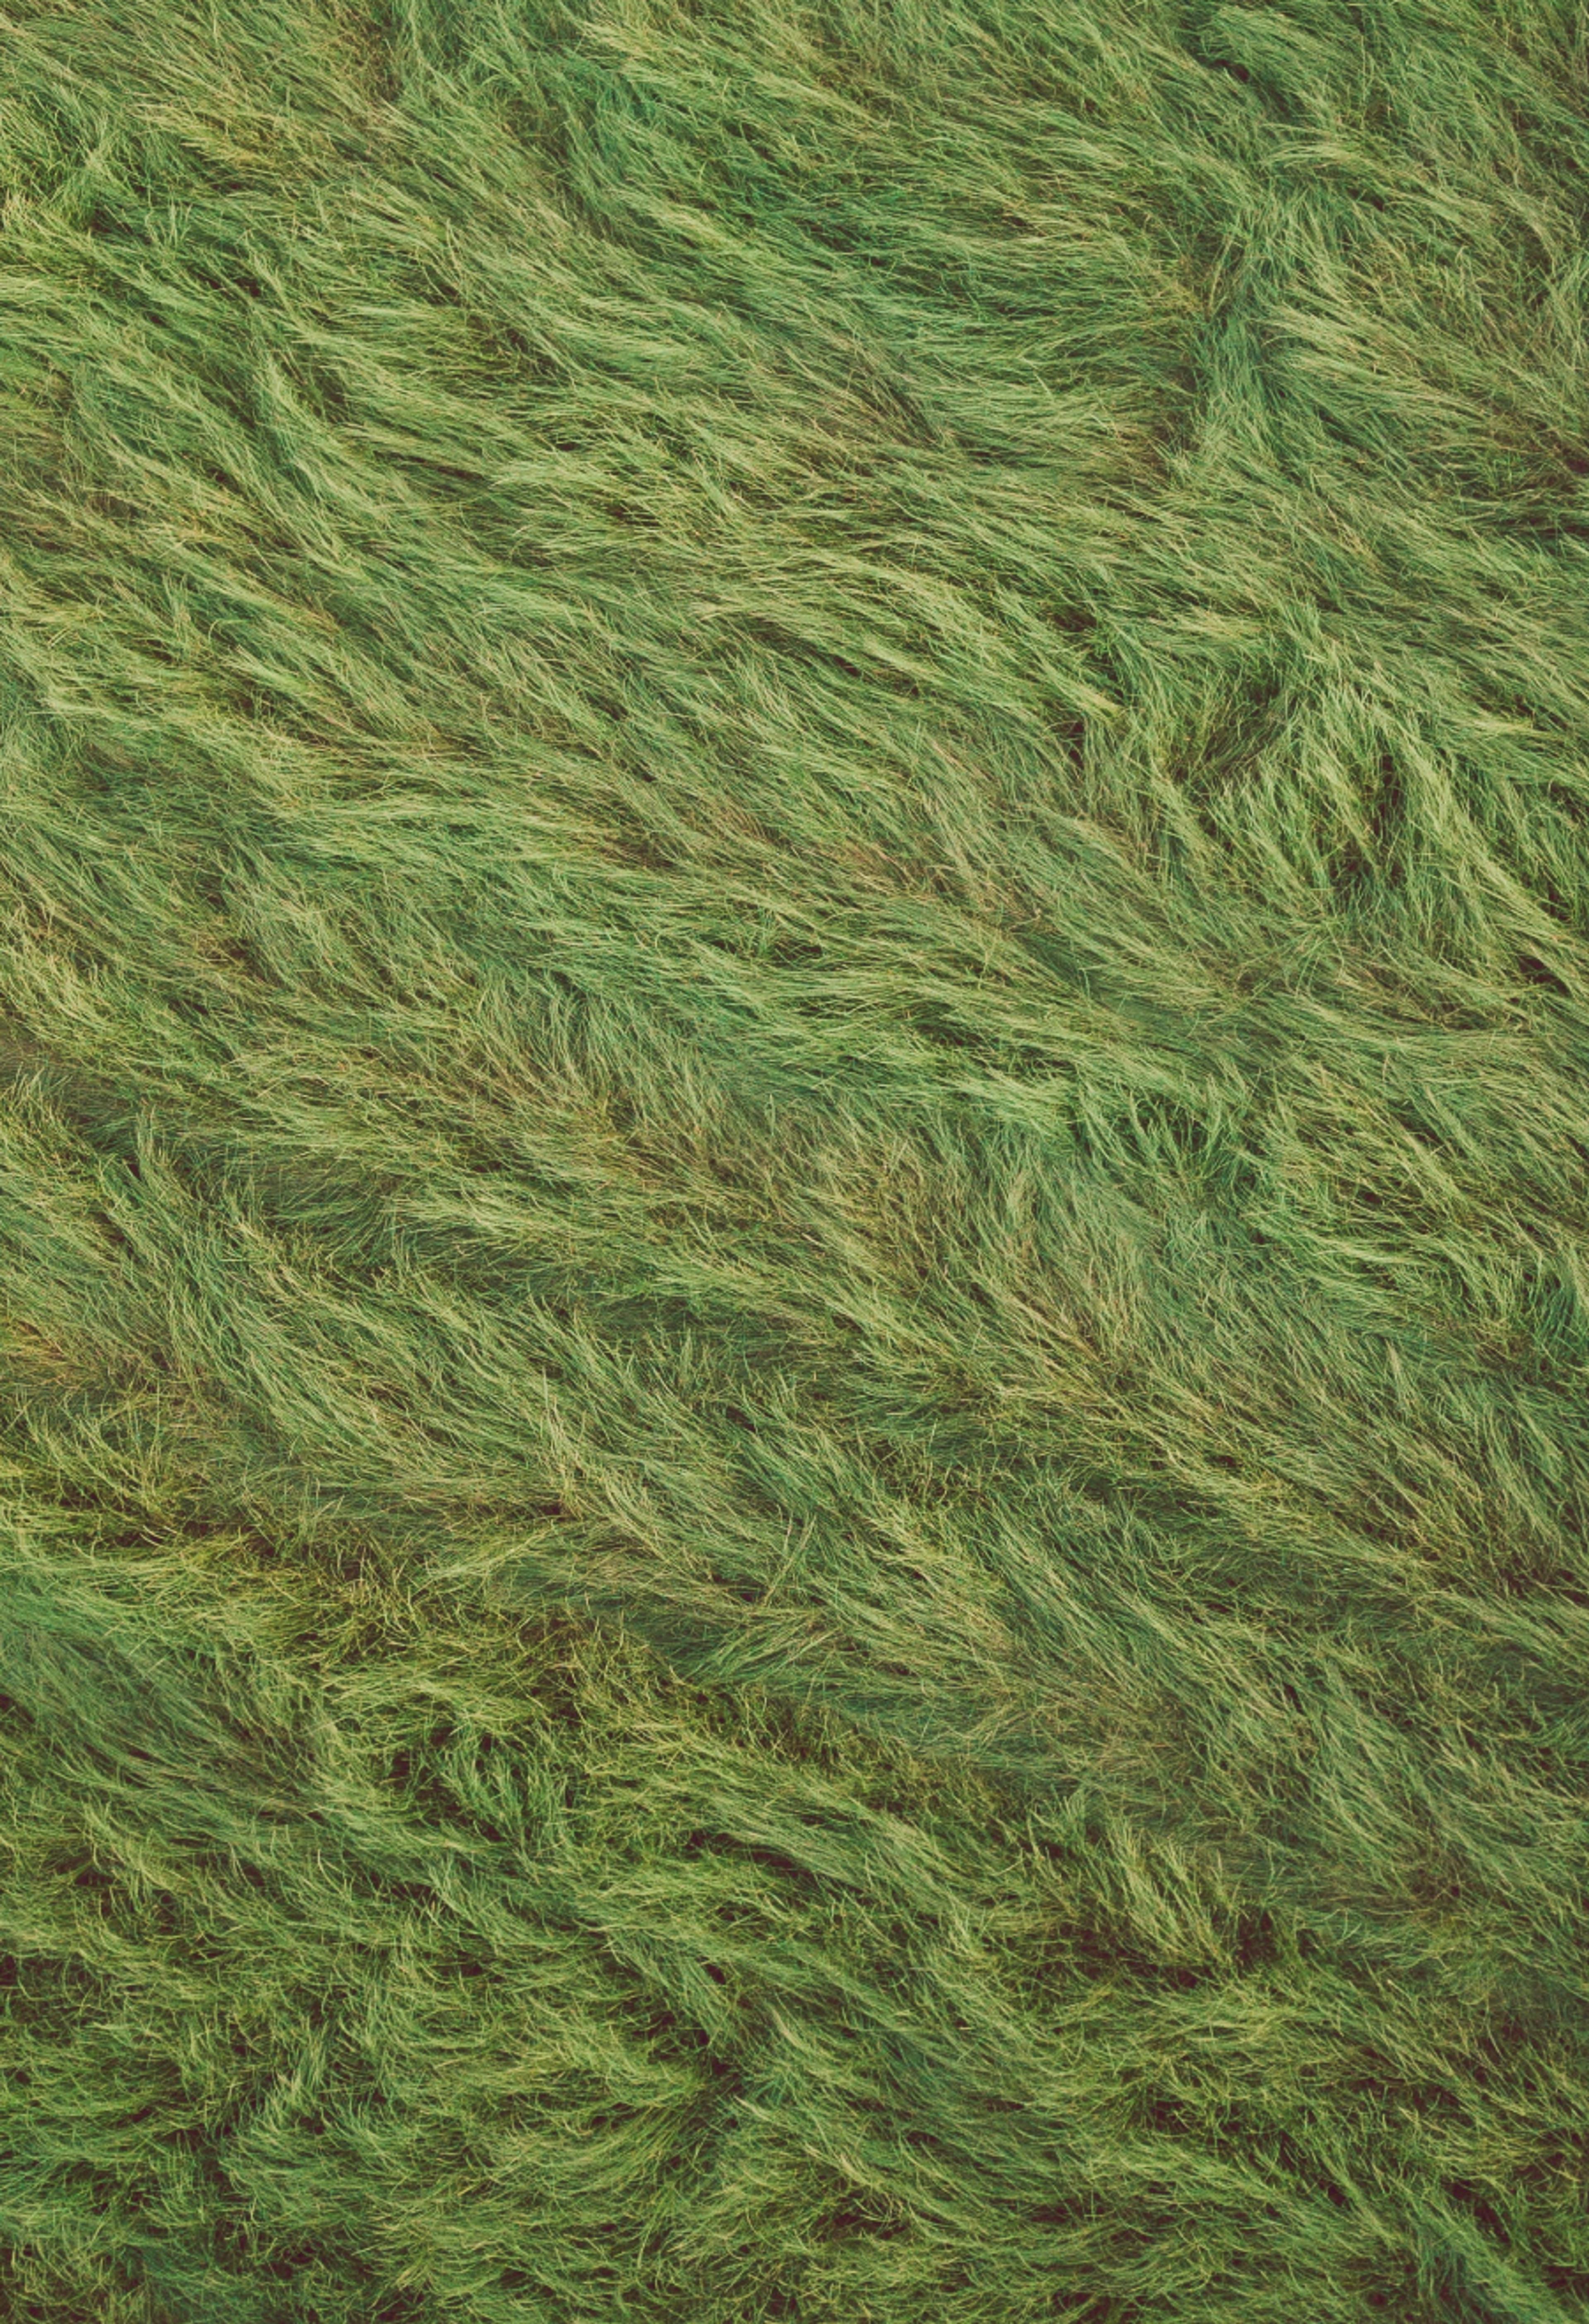 Green, windswept grass.